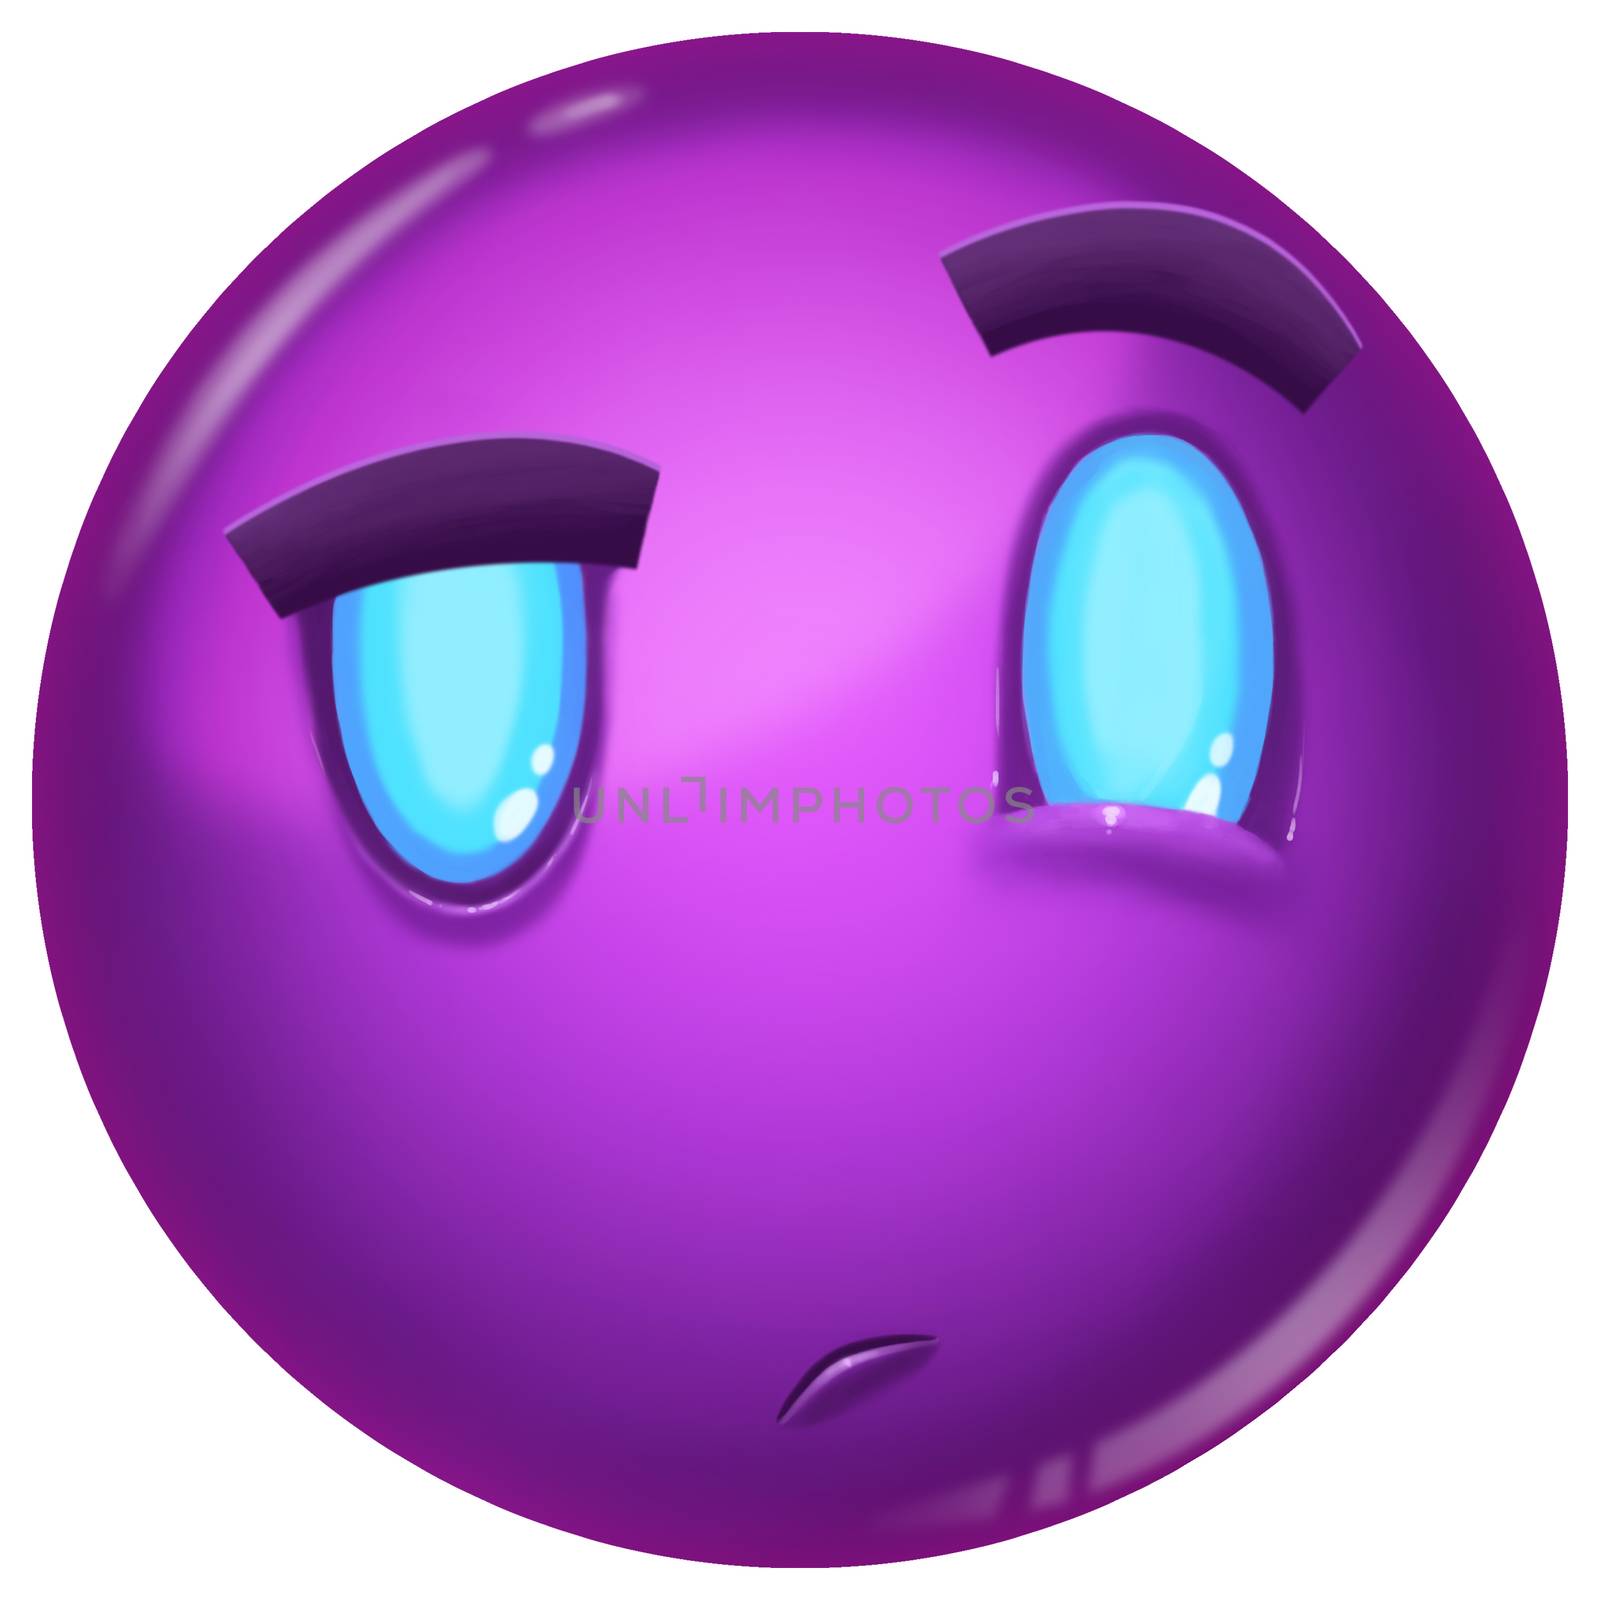 Illustration: Funny Emoji Face Ball C. Element / Character Design - Fantastic / Cartoon Style by NextMars